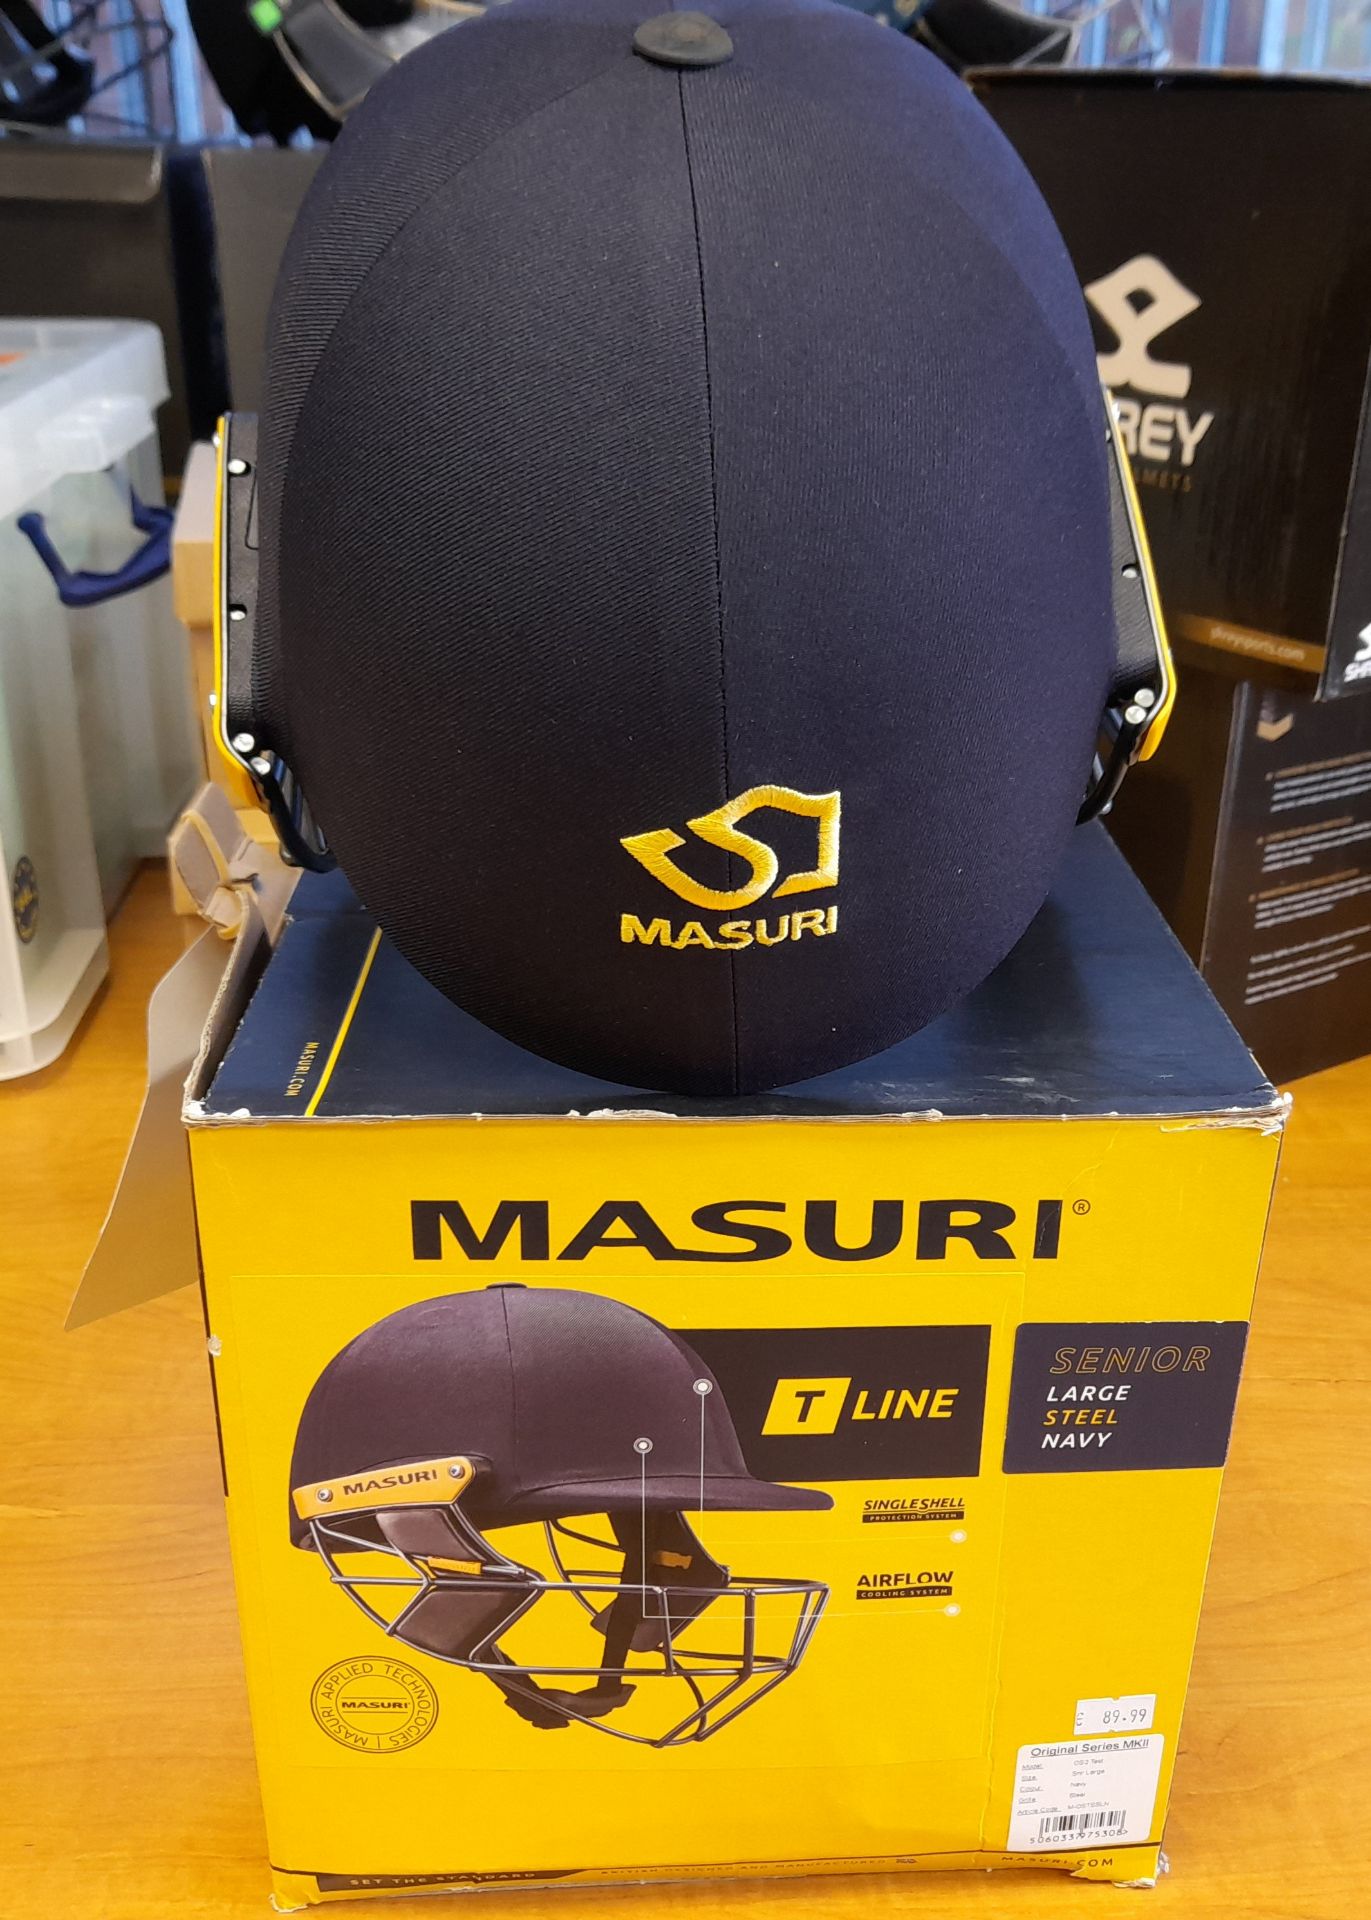 Masuri T Line Original Series MKII Test Helmet with Steel Grill, Size Senior Large, Box, Rrp. £89. - Image 2 of 4